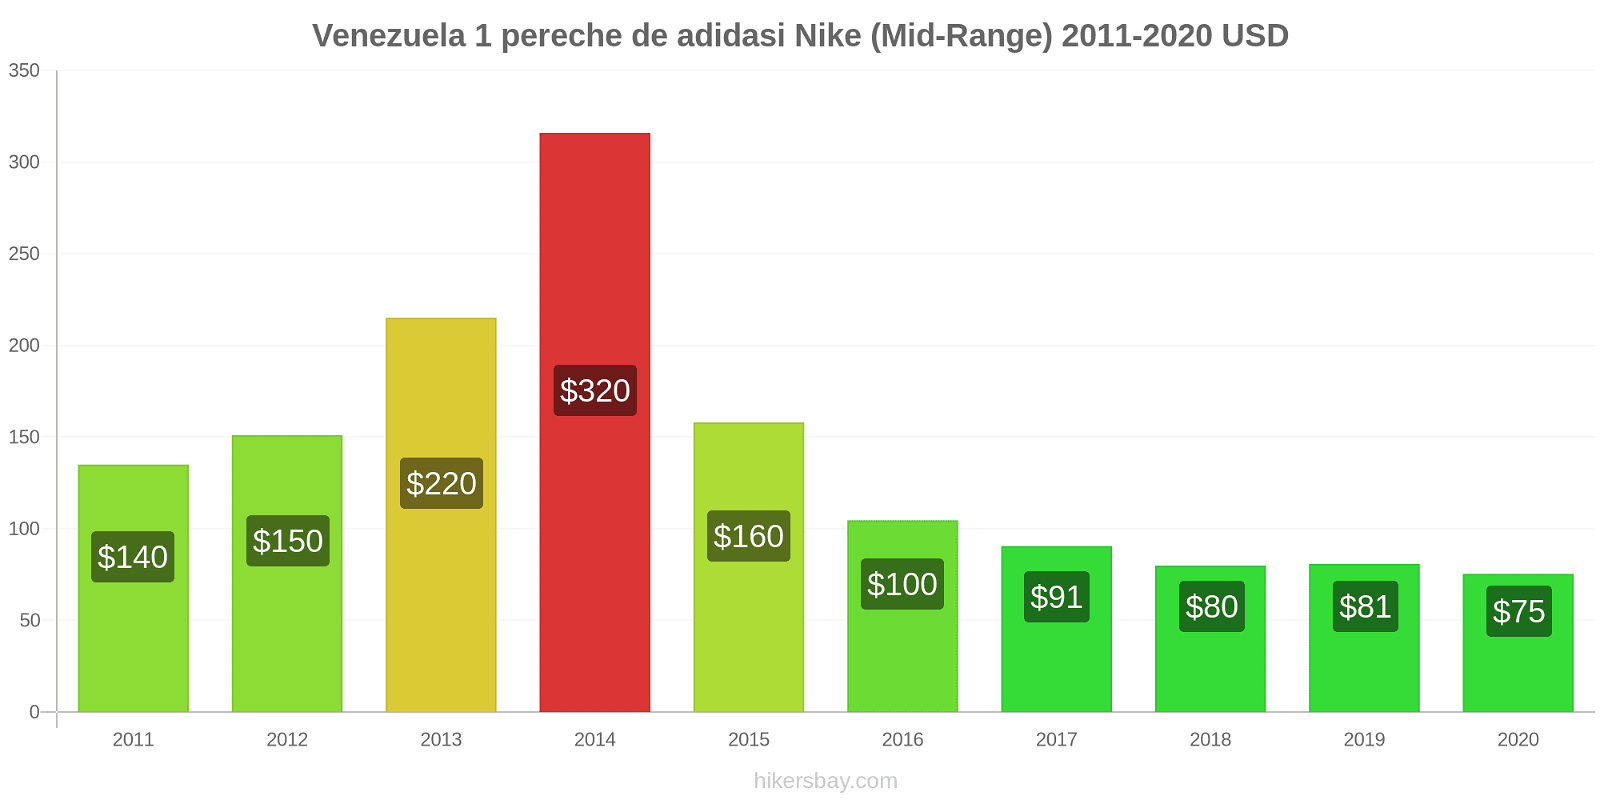 Venezuela modificări de preț 1 pereche de adidasi Nike (Mid-Range) hikersbay.com